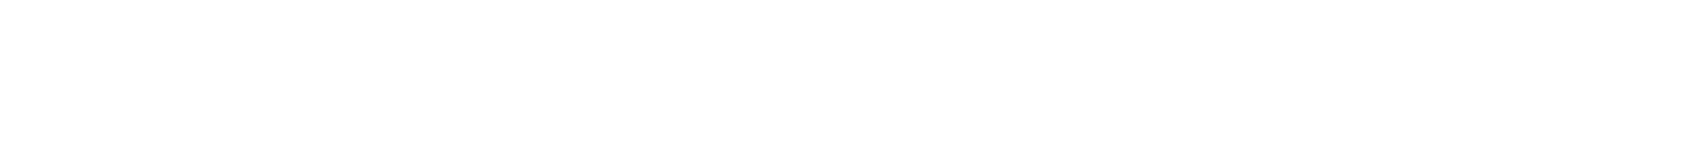 Adorn 1 Line Logo Nashville WHITE